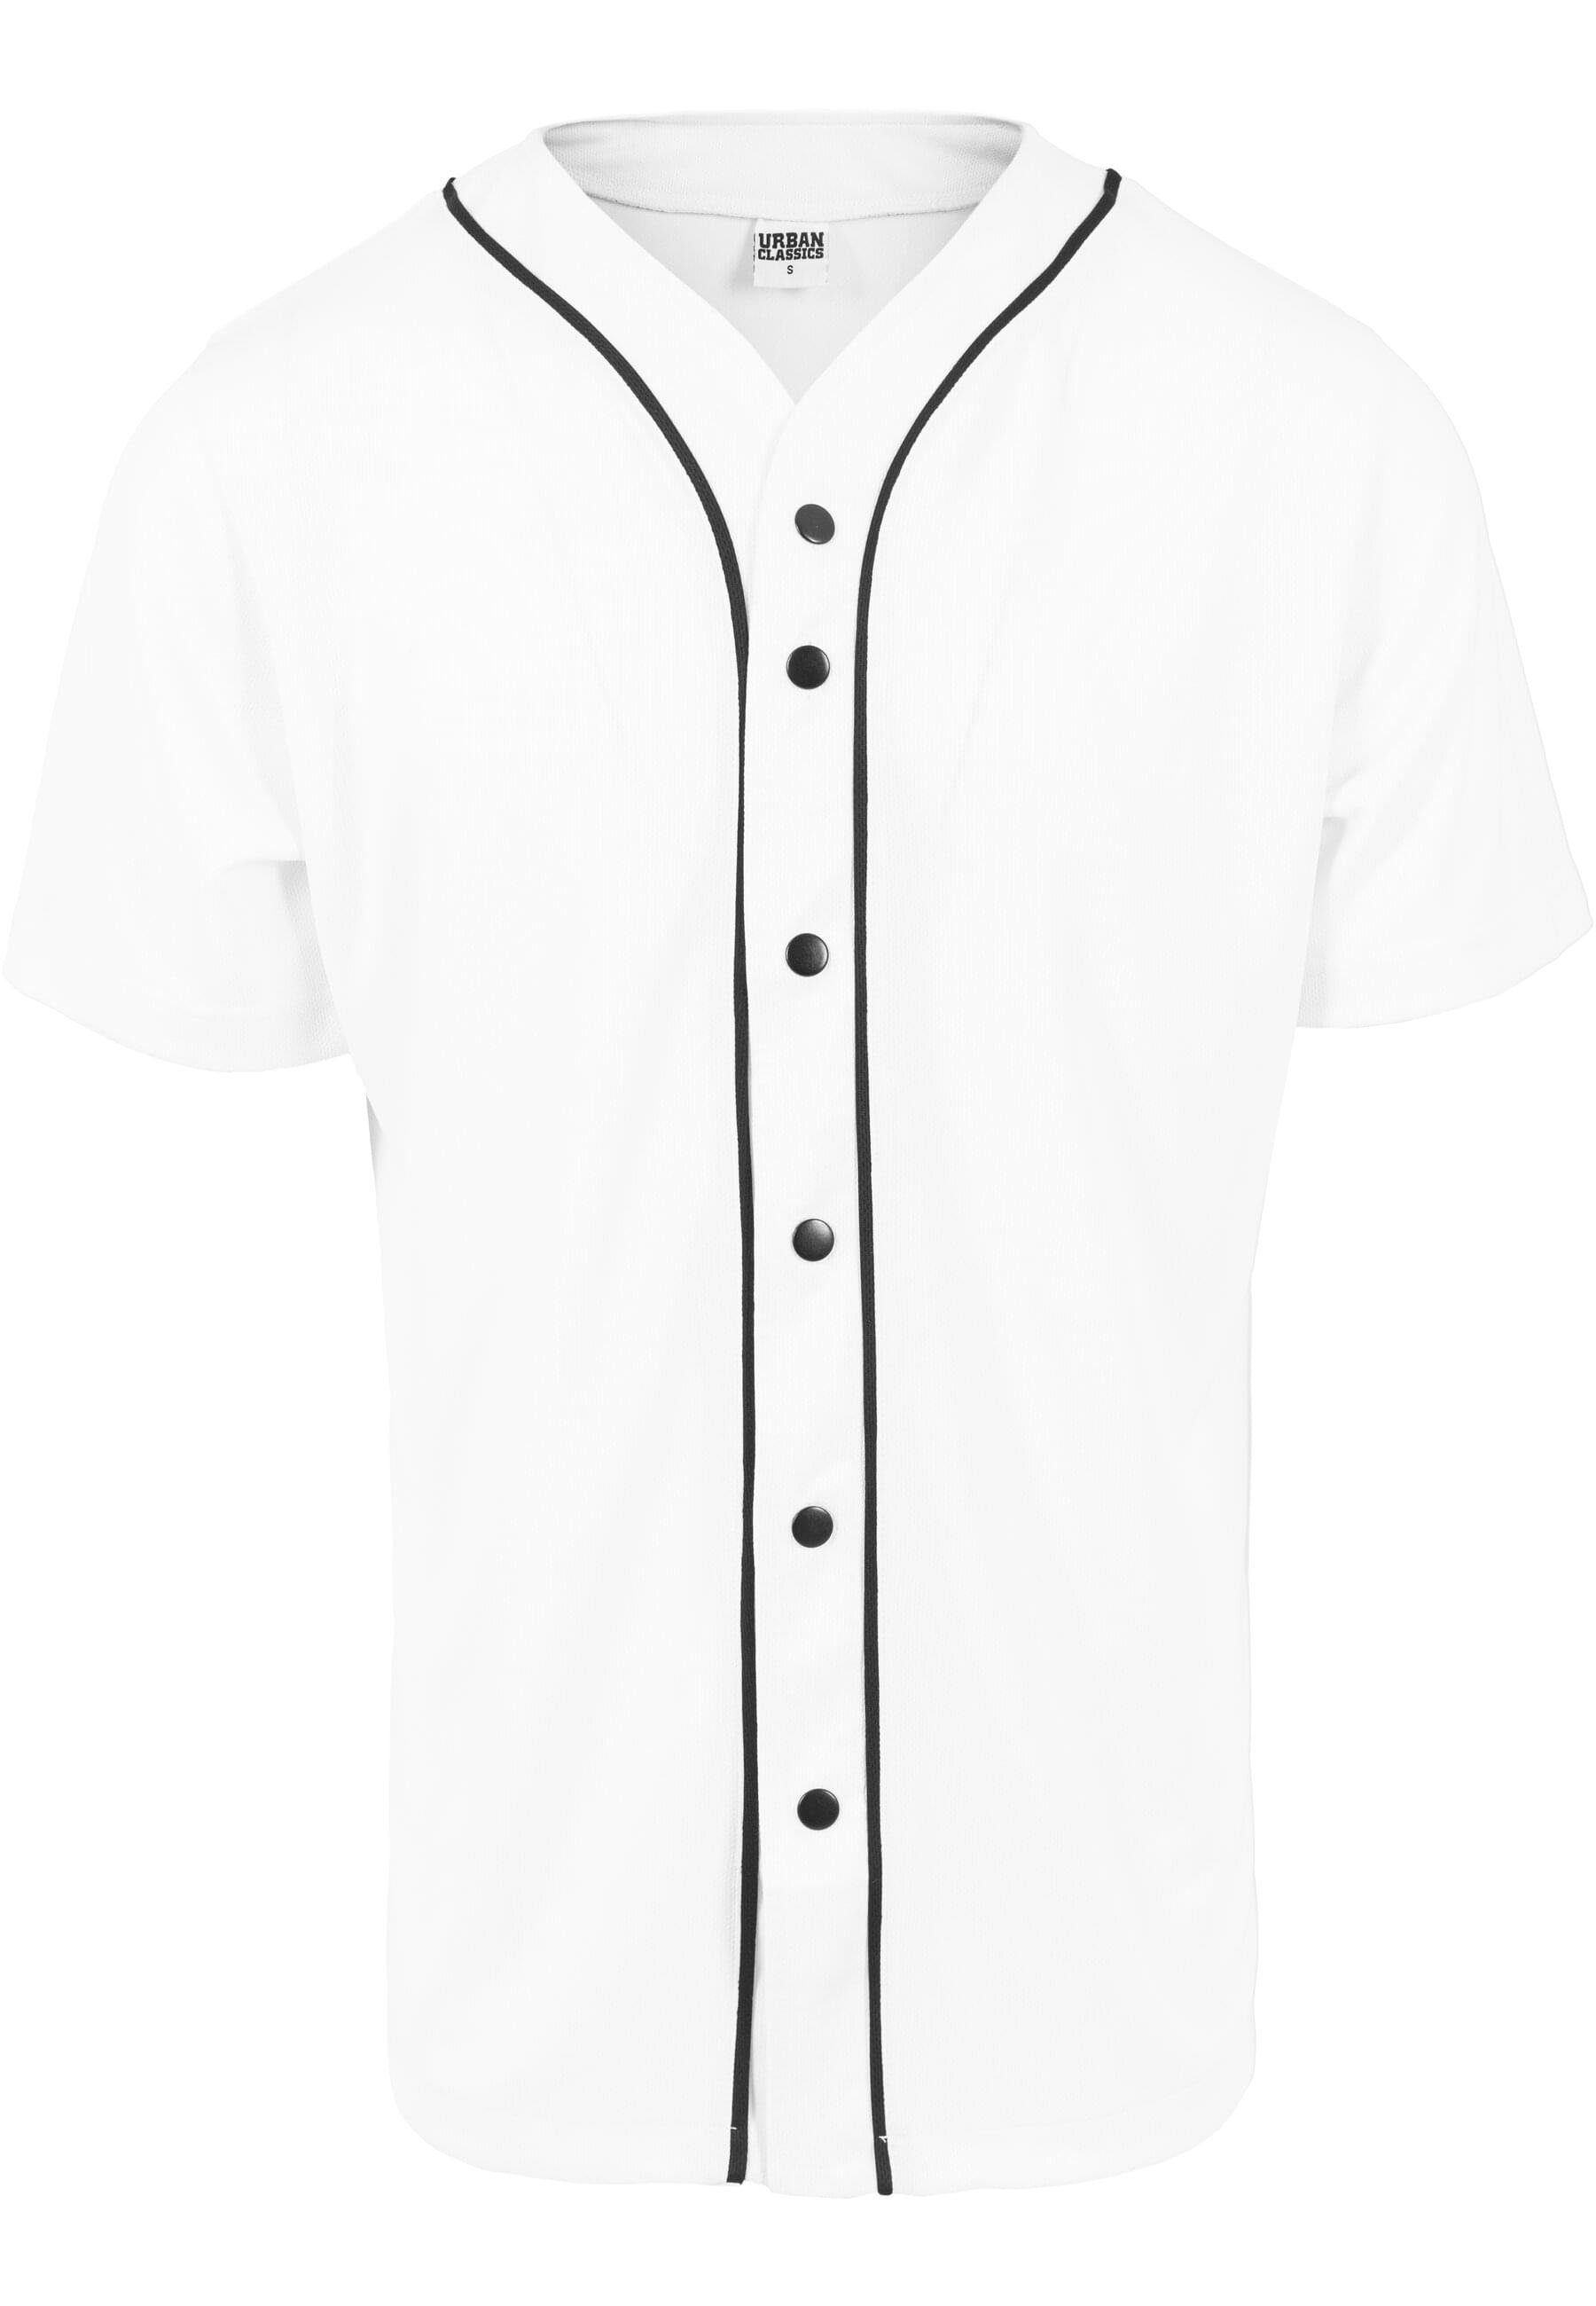 Baseball Mesh Jersey Herren (1-tlg) T-Shirt URBAN white/black CLASSICS